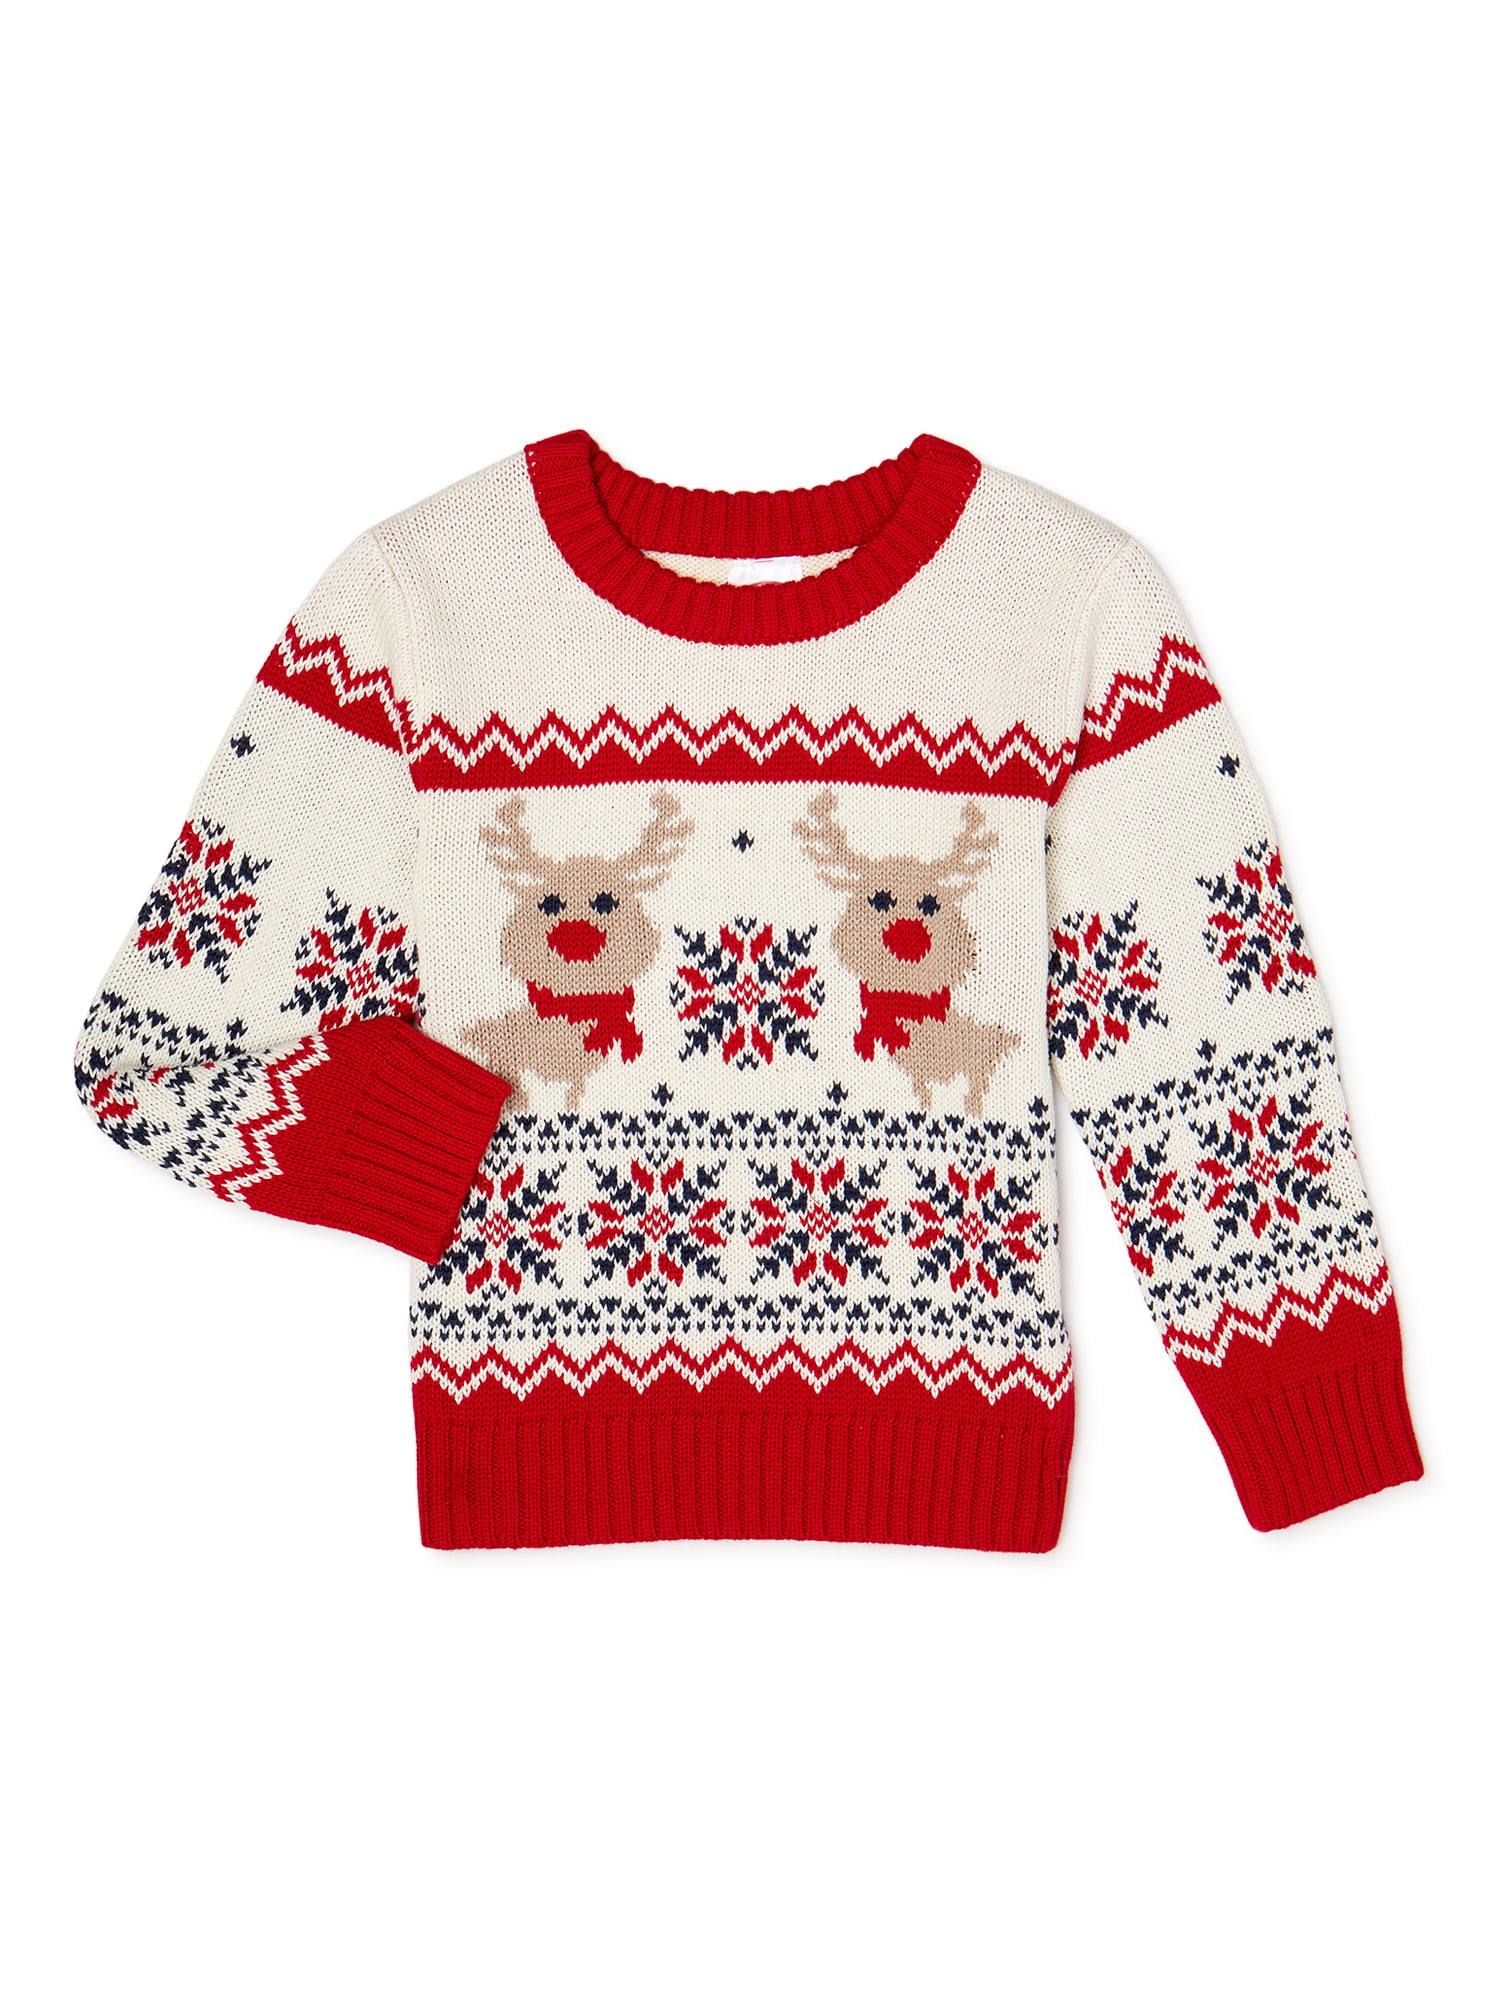 XIPAI Baby Toddler Girls Christmas Sweater 